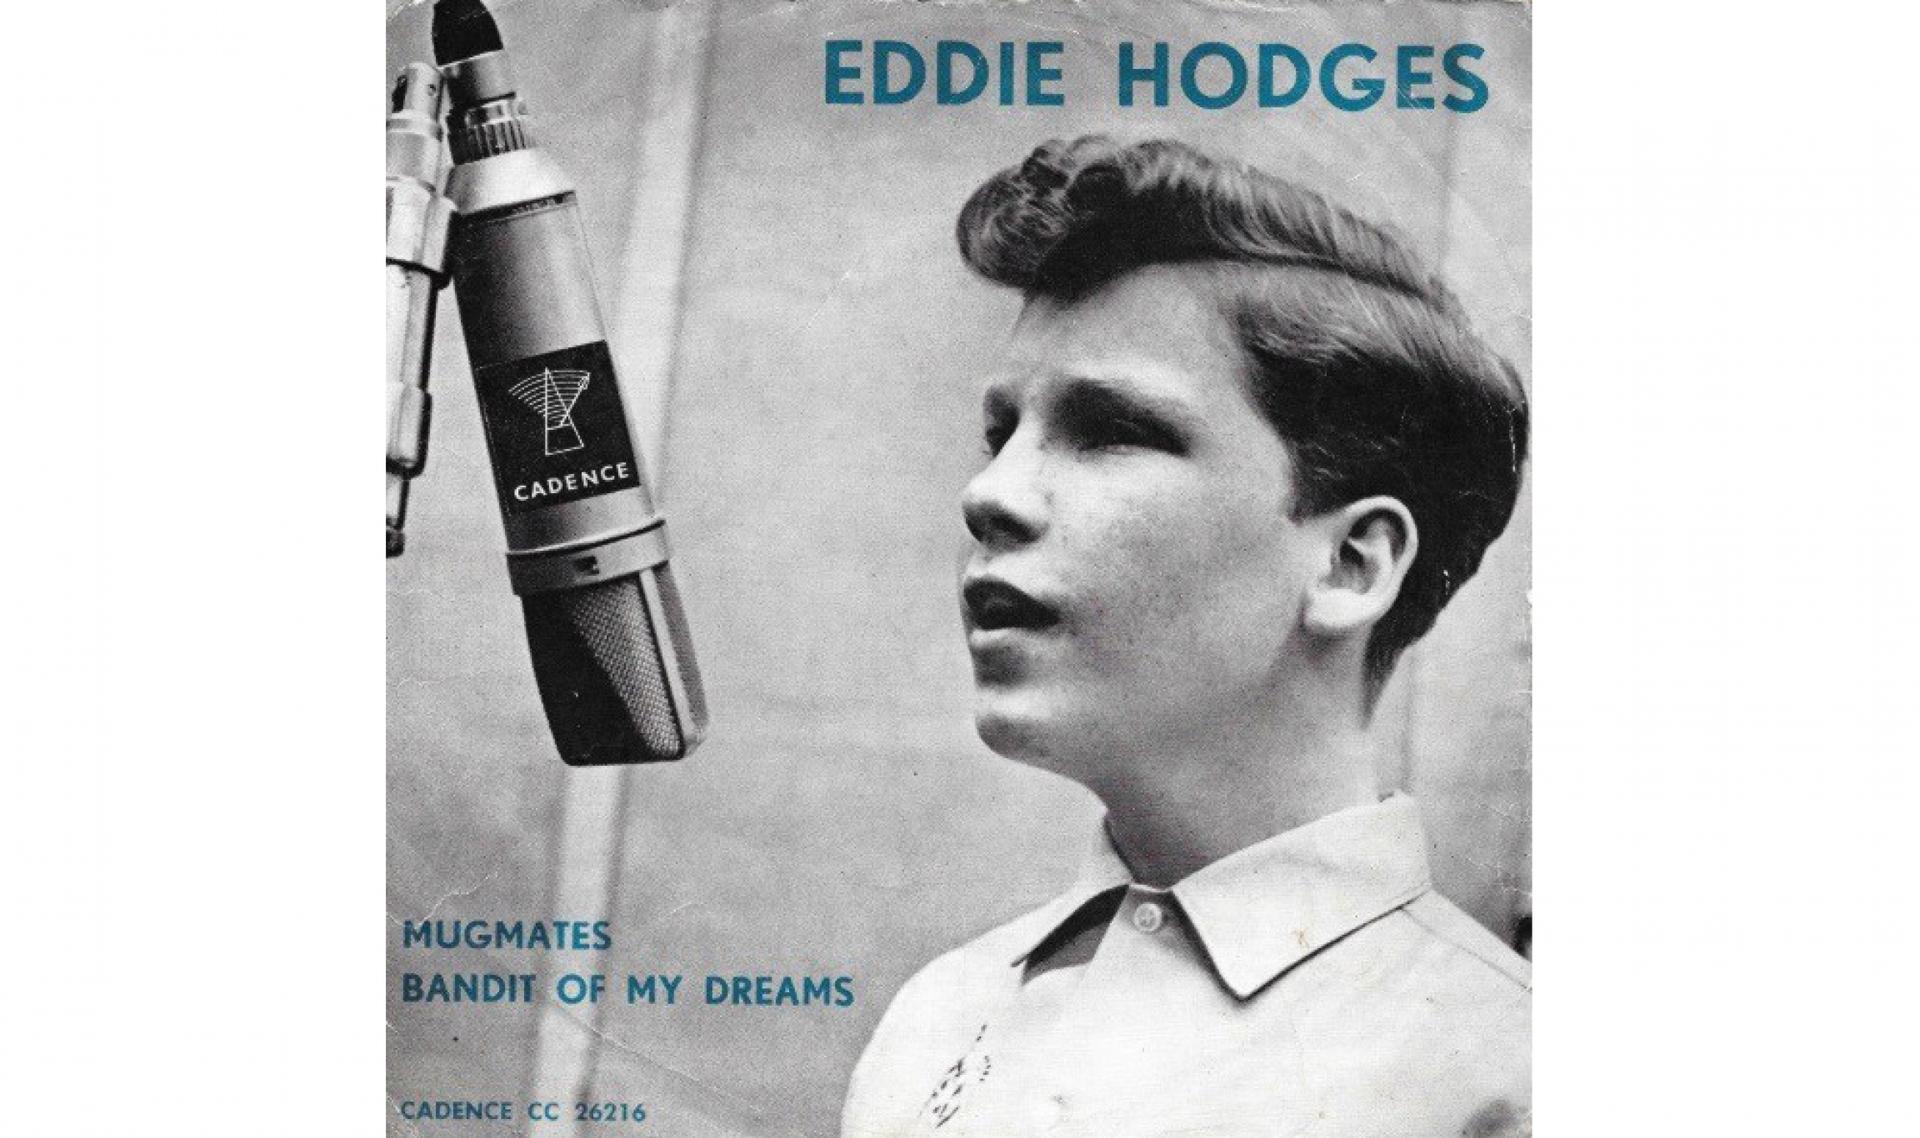 Eddie Hodges’ “Mugmates” single.